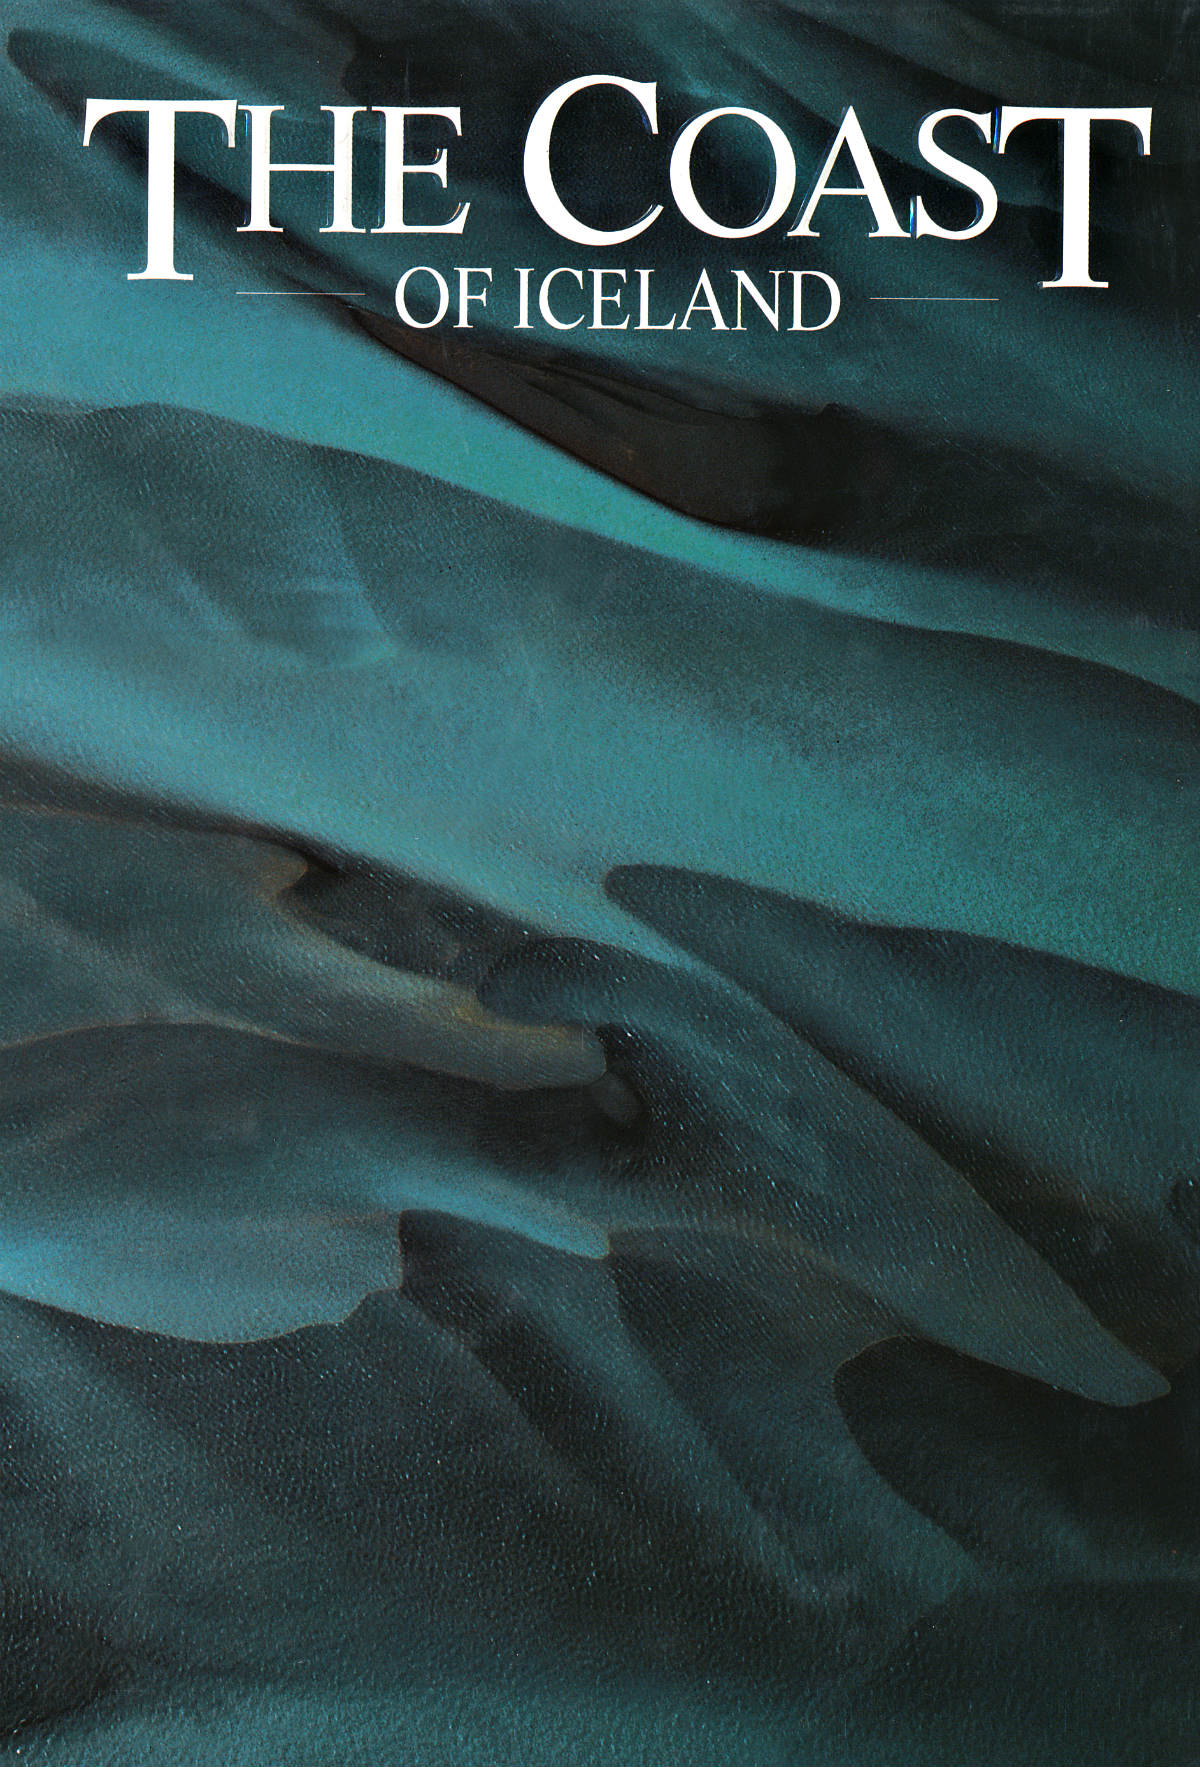 The Coast of Iceland by Guðmundur Páll Ólafsson